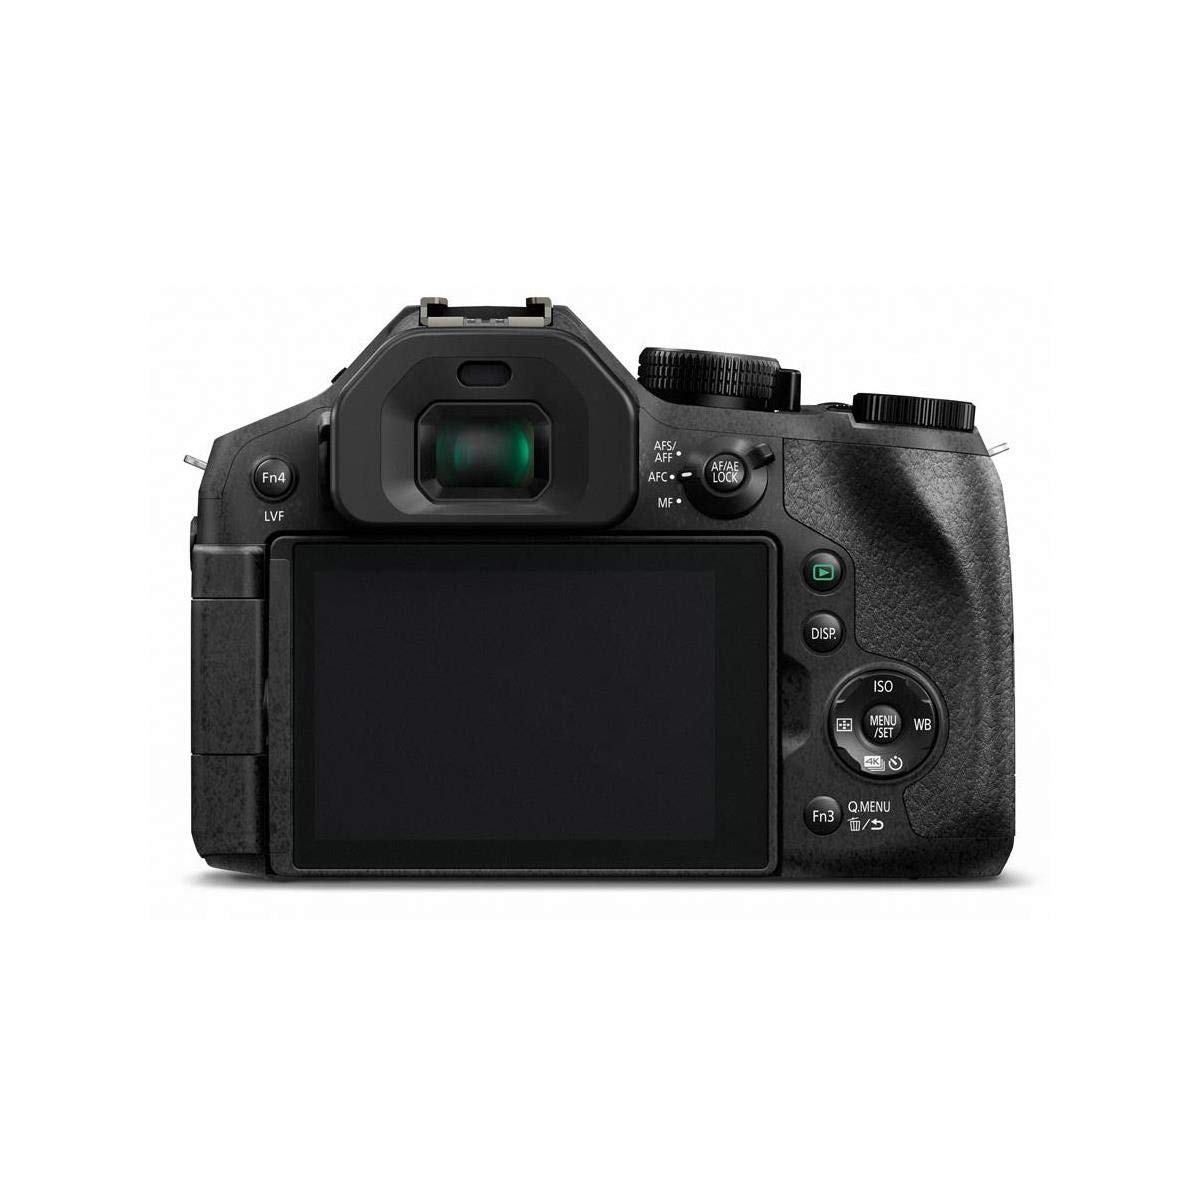 Panasonic Lumix DMC-FZ300 Digital Camera, 12.1 Megapixel, 1/2.3-inch Sensor, 4K Video, Splash/Dustproof Body, 24X Zoom Lens F2.8 Bundle with Bag, 32GB SD Card, Mac Software Pack, Filter, Cleaning Kit